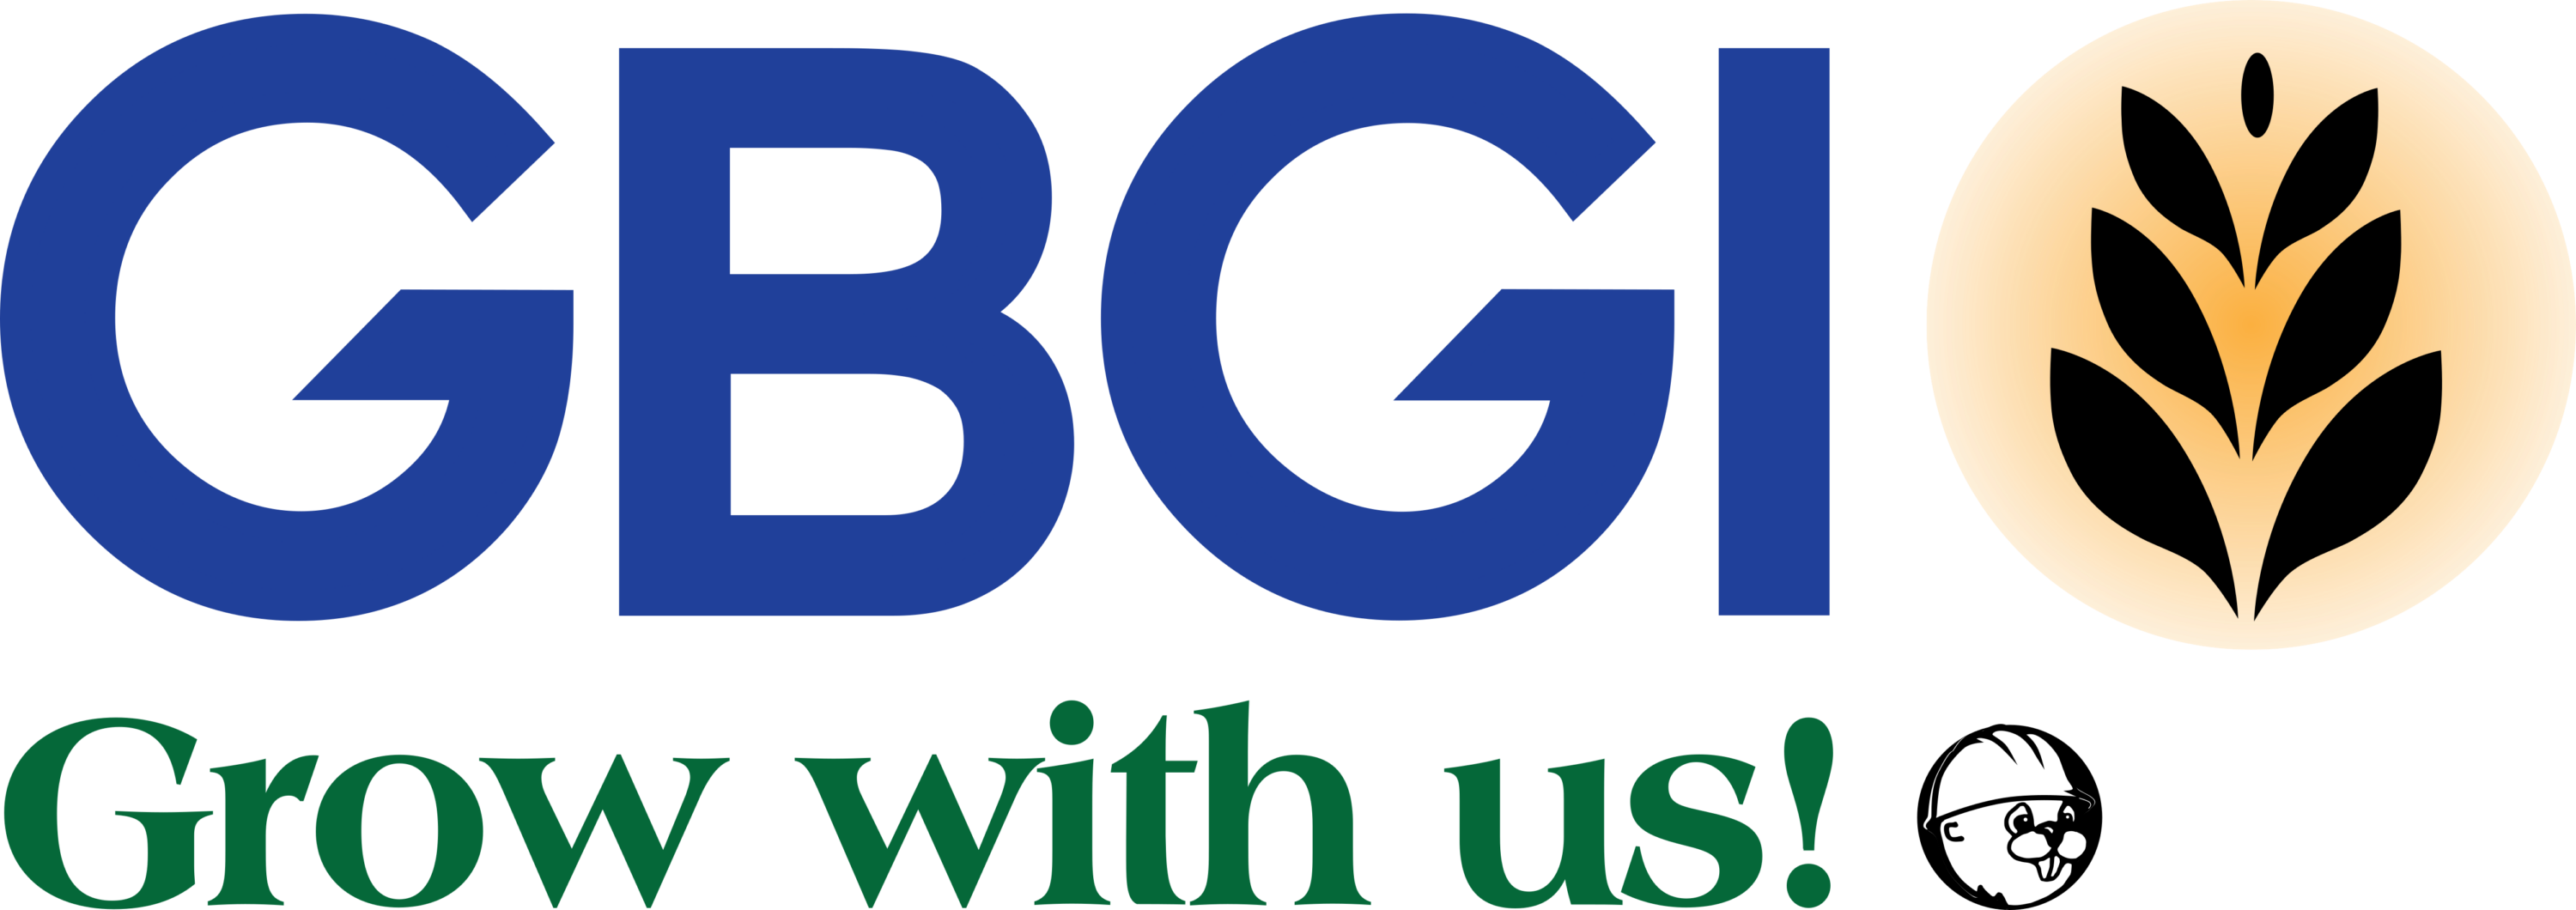 GBGI Inc Logo